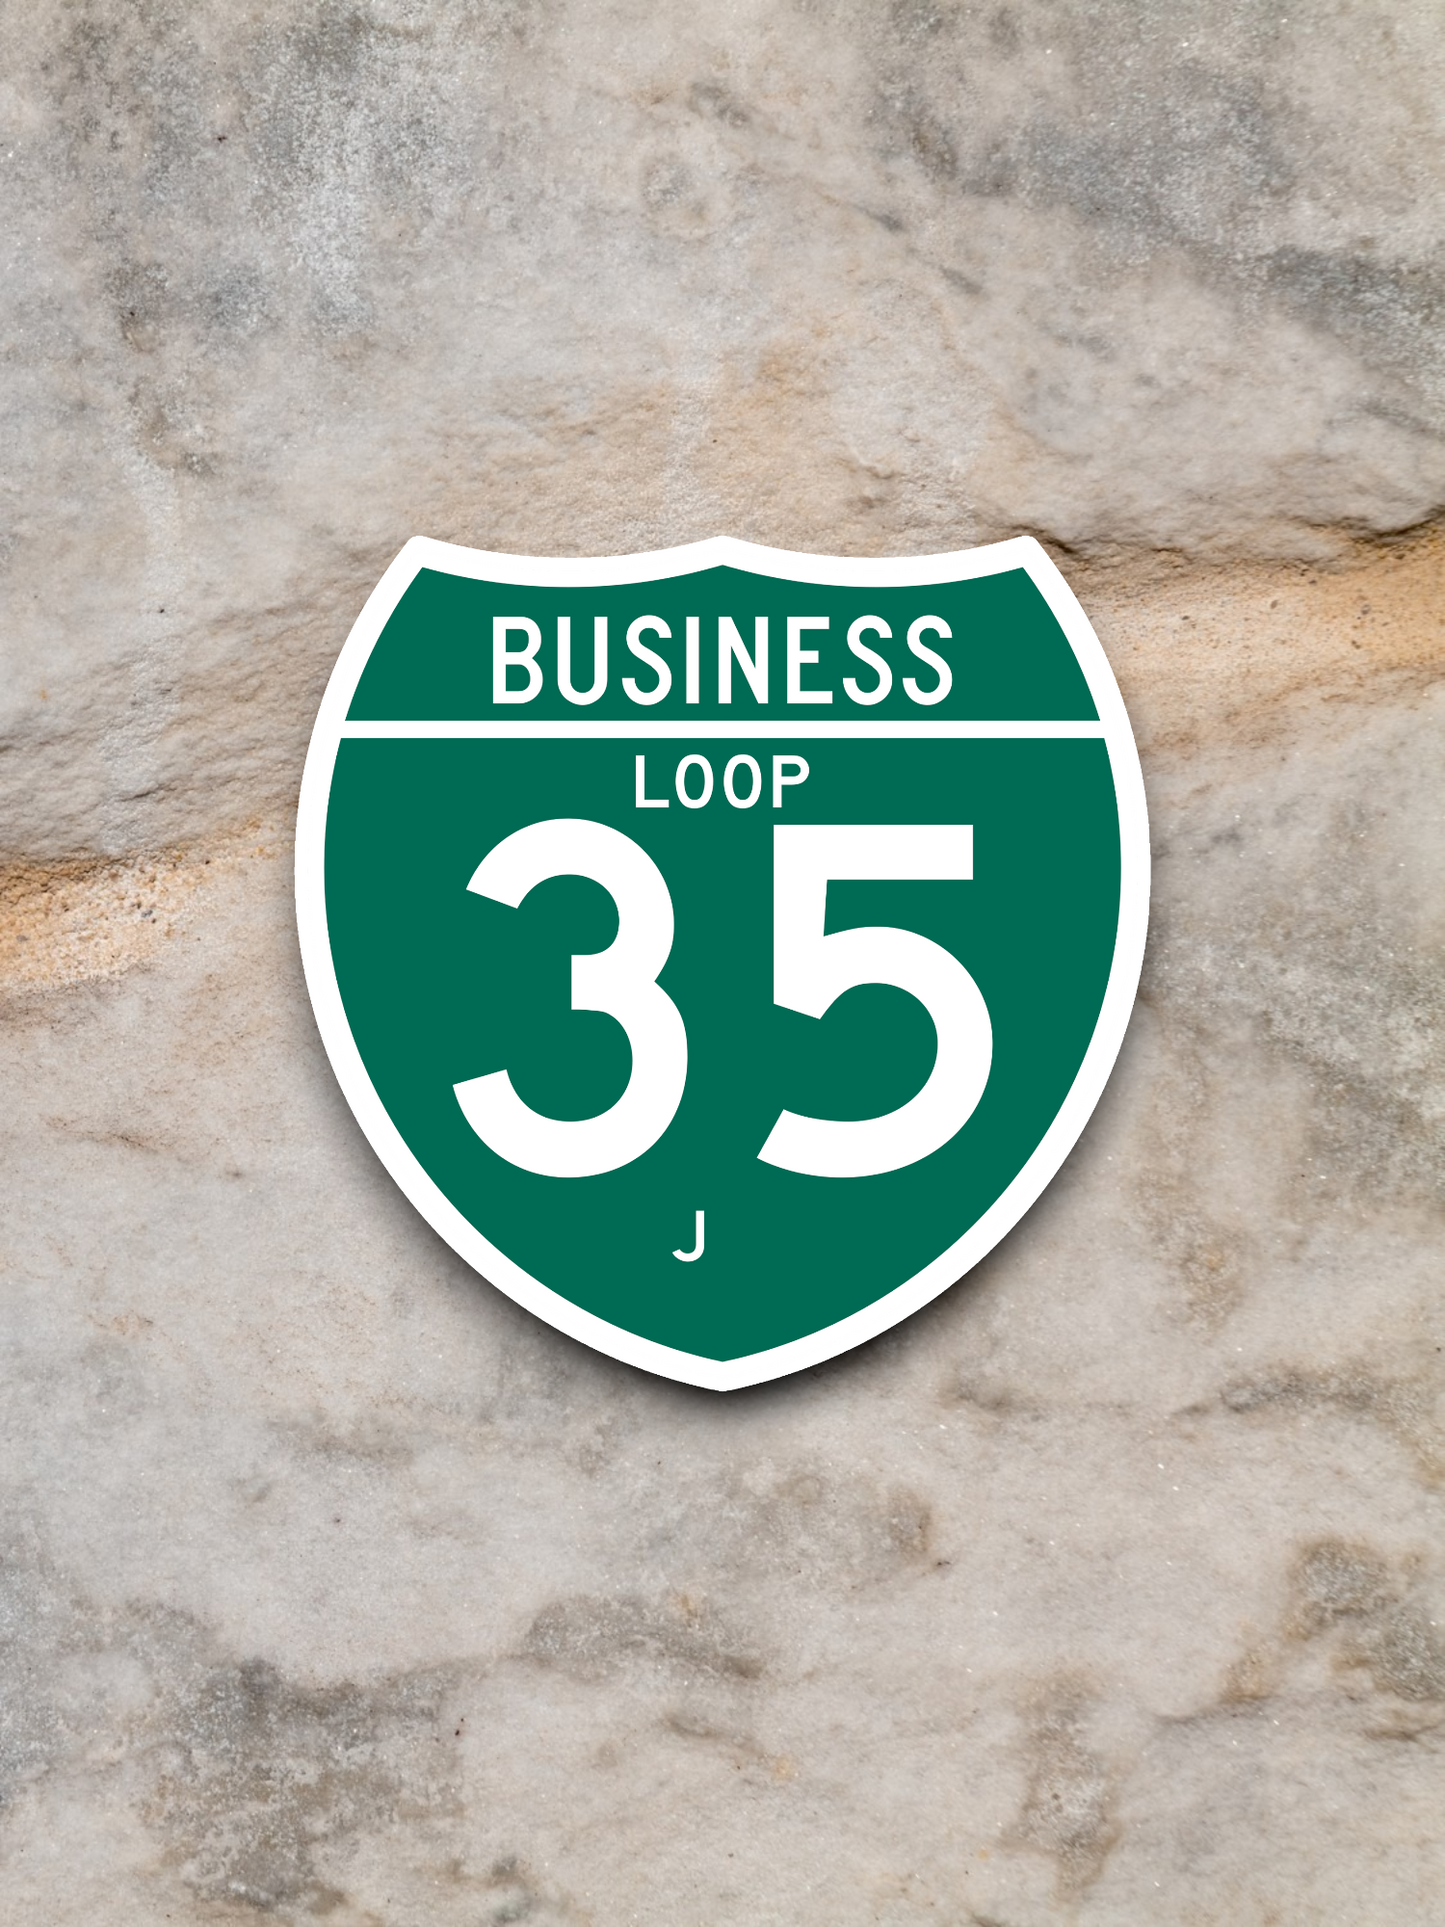 Business Spur Interstate 35-J Texas Road Sign Sticker